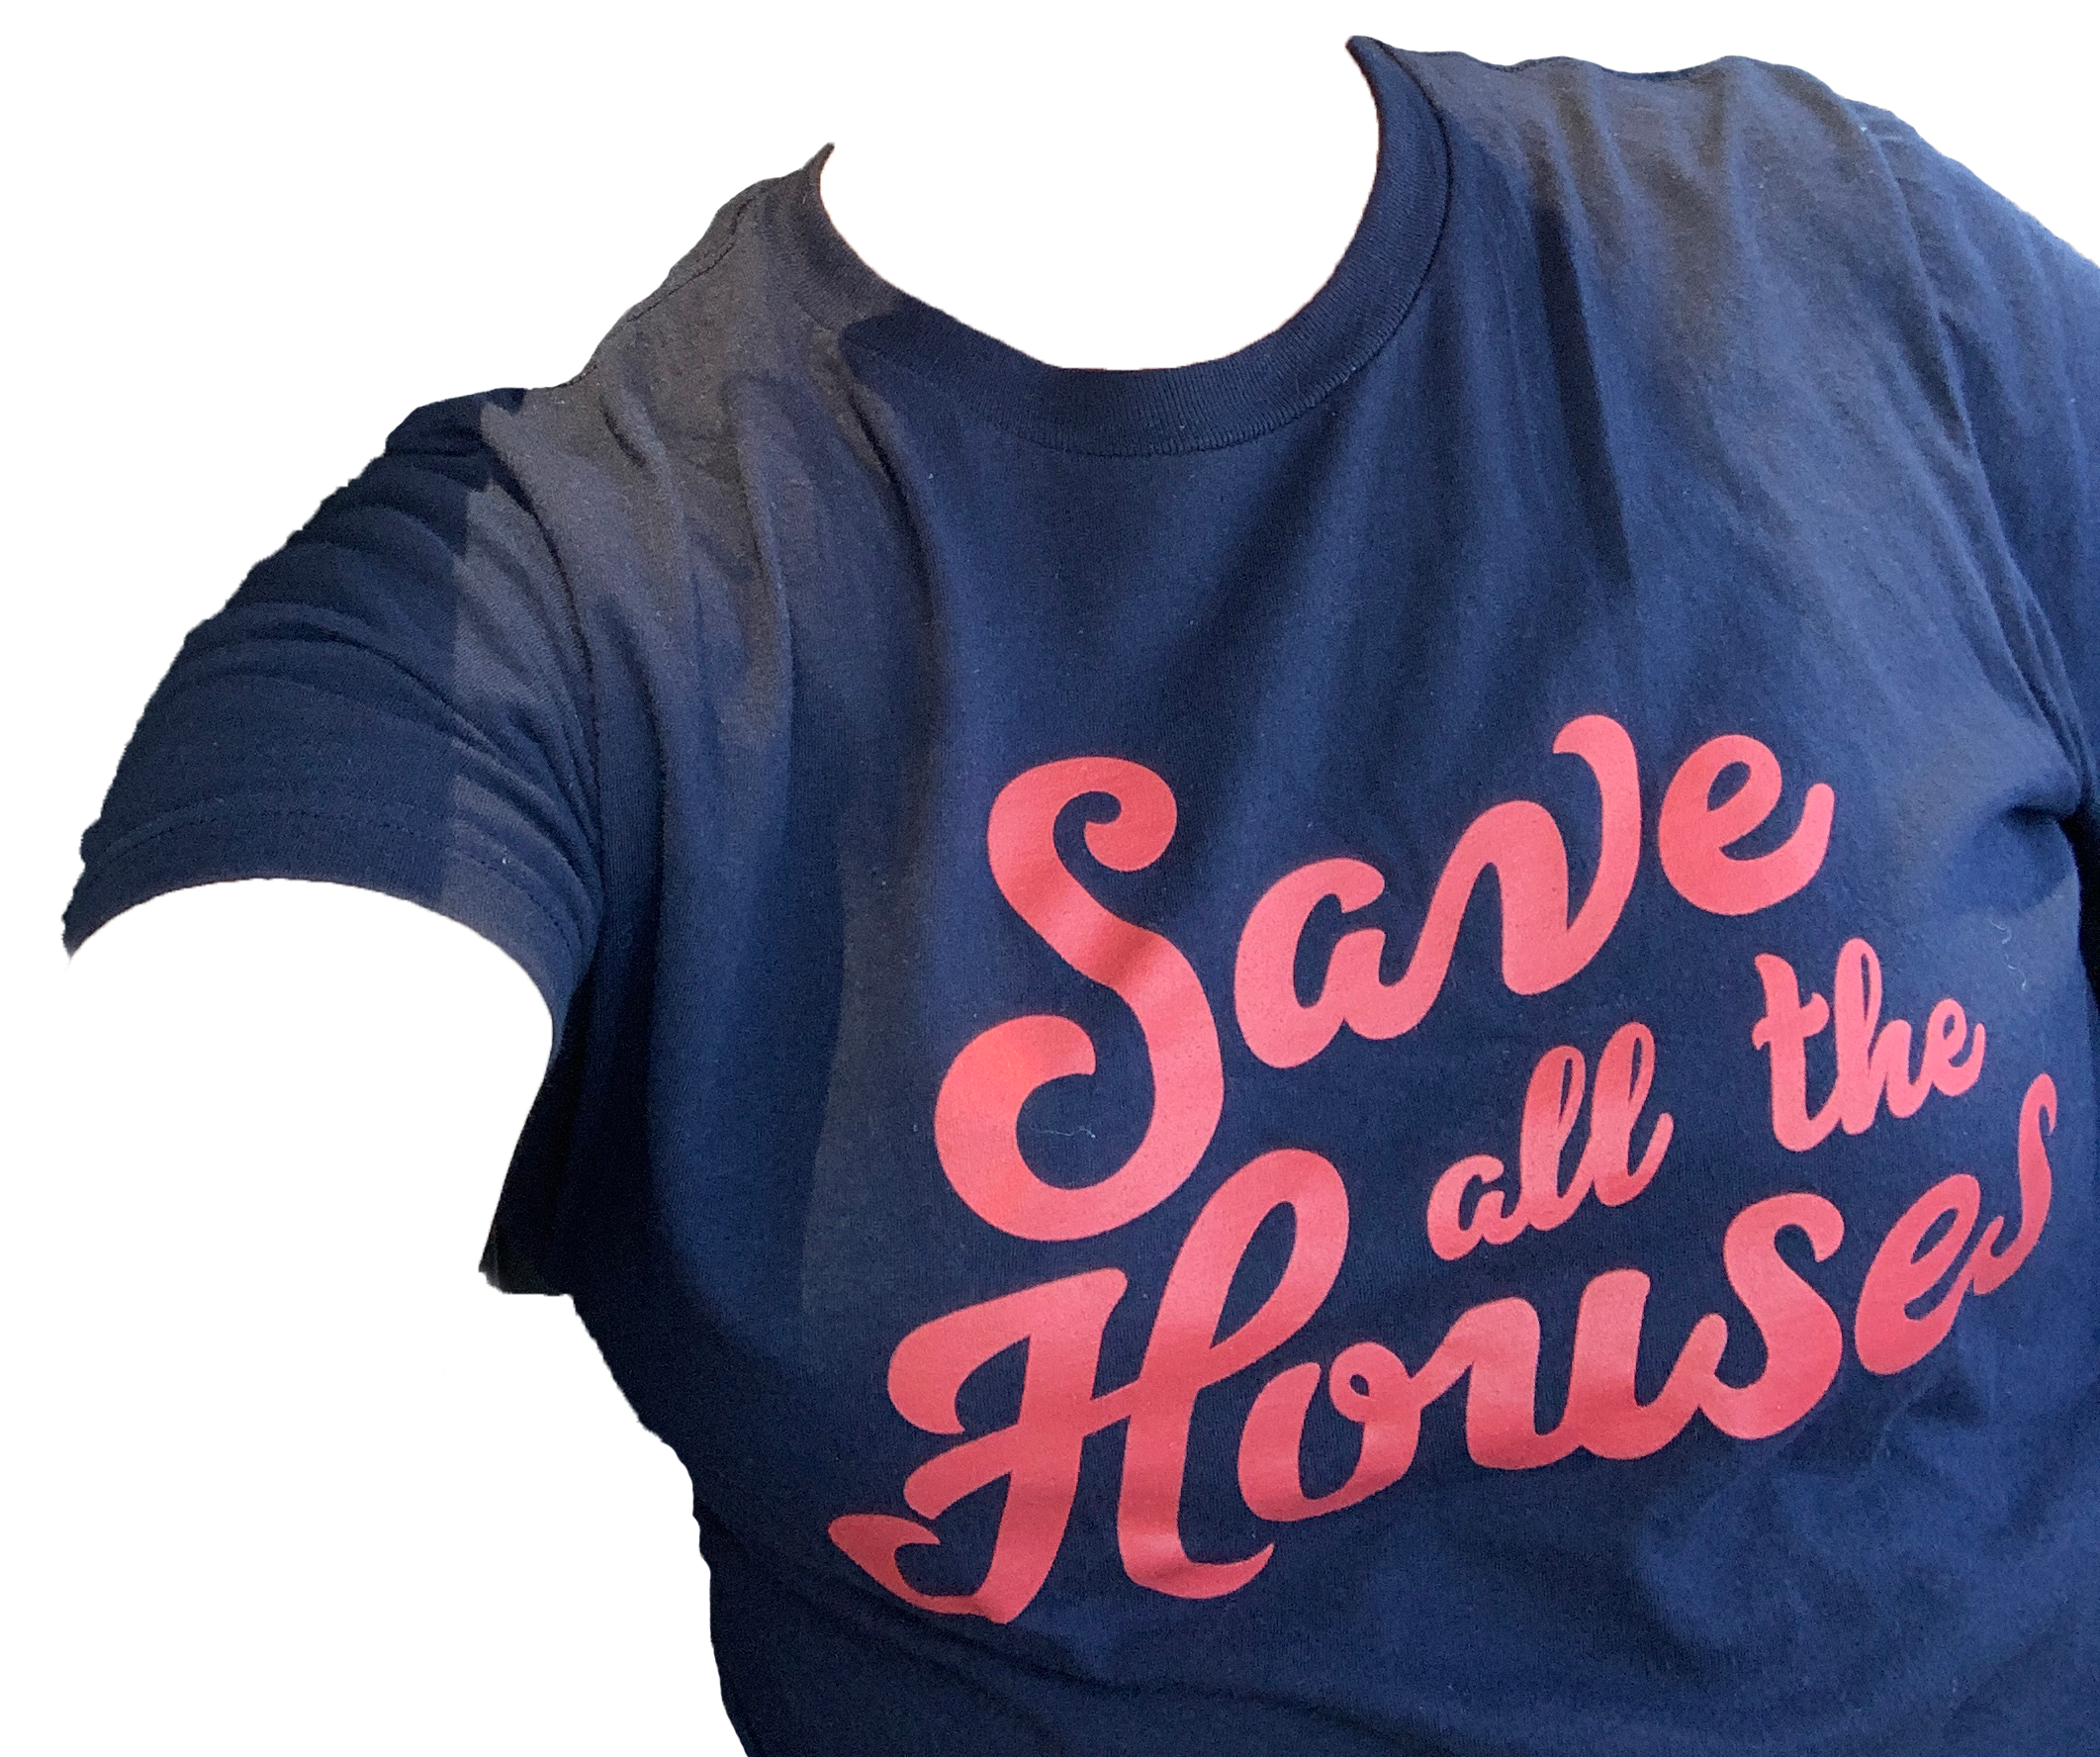 Circa Houses - Save all the Houses t-shirt